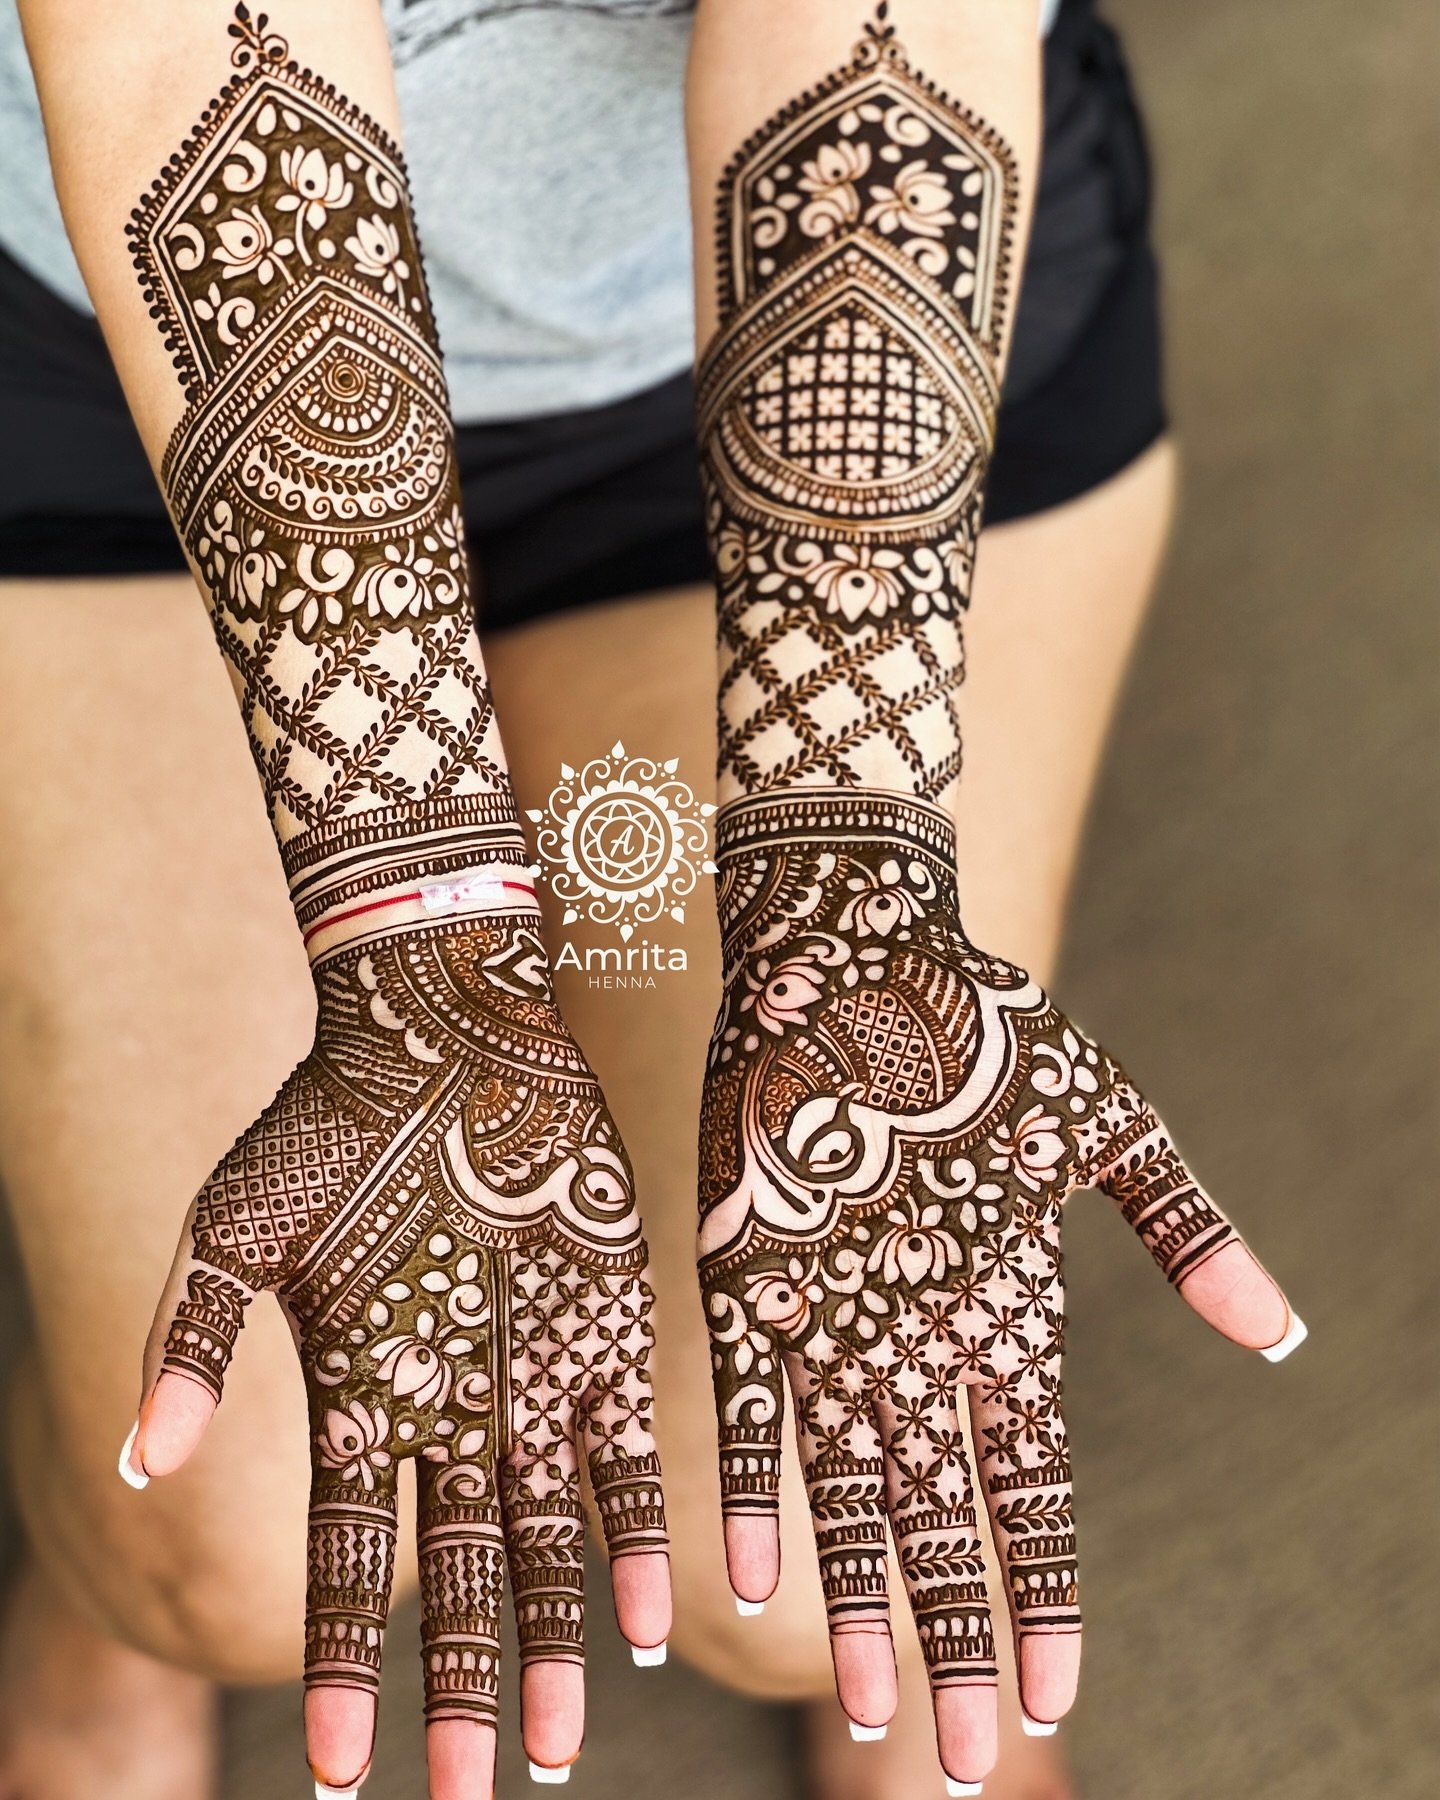 Accepting Bridal and Family henna bookings for 2024. Kindly DM or send an email to amritahenna@gmail.com with your inquiries!

#HennaArt #amritahenna #bridalmehndi #hennadesign #wedmegood #orlandoart #bridalhenna #weddinginspo #indianwedding #orlando